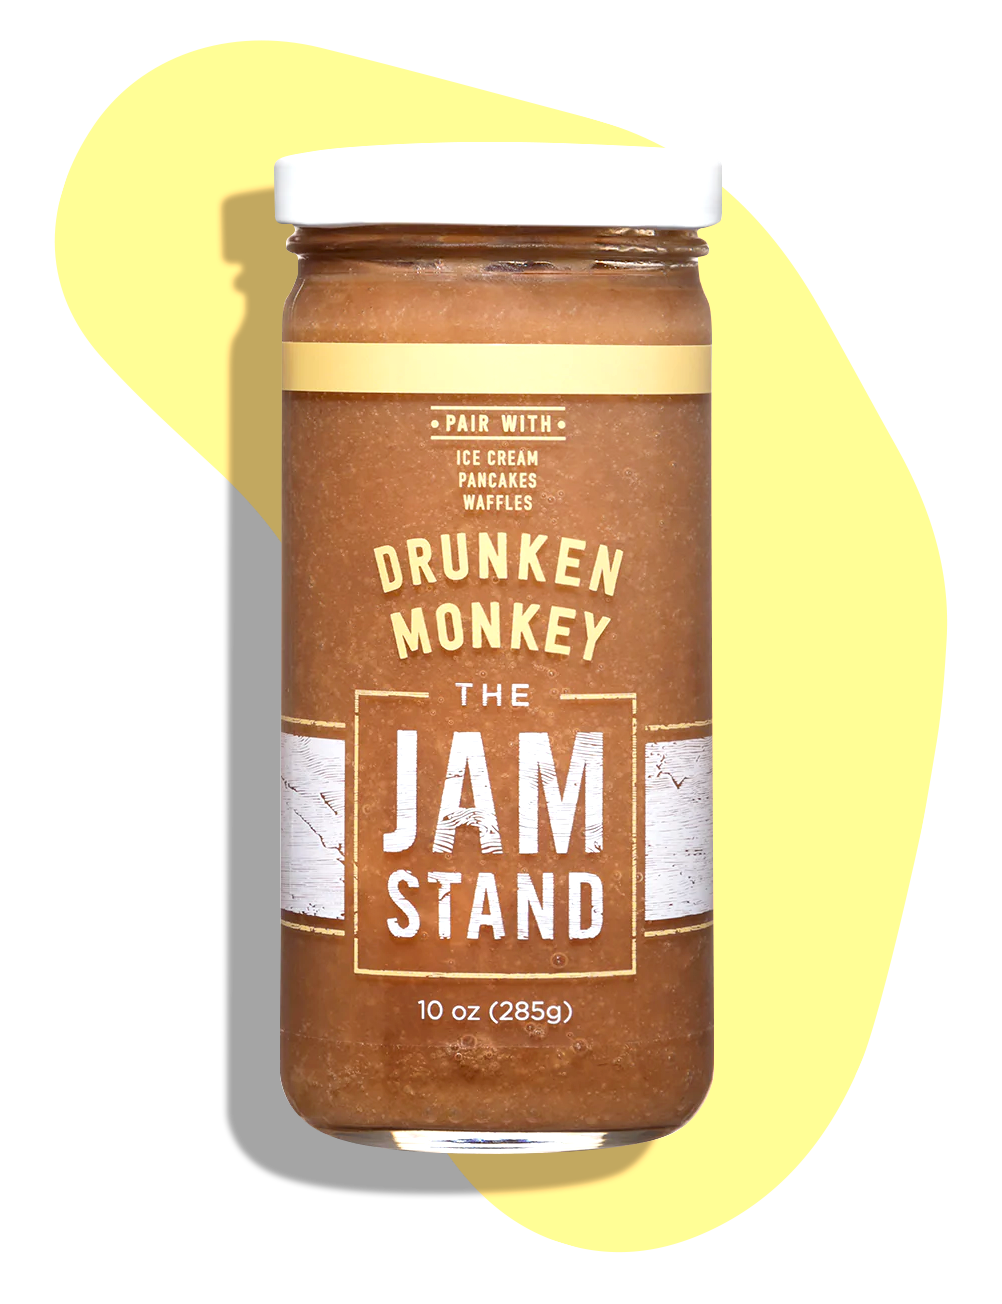 The Jam Stand: Banana Jam